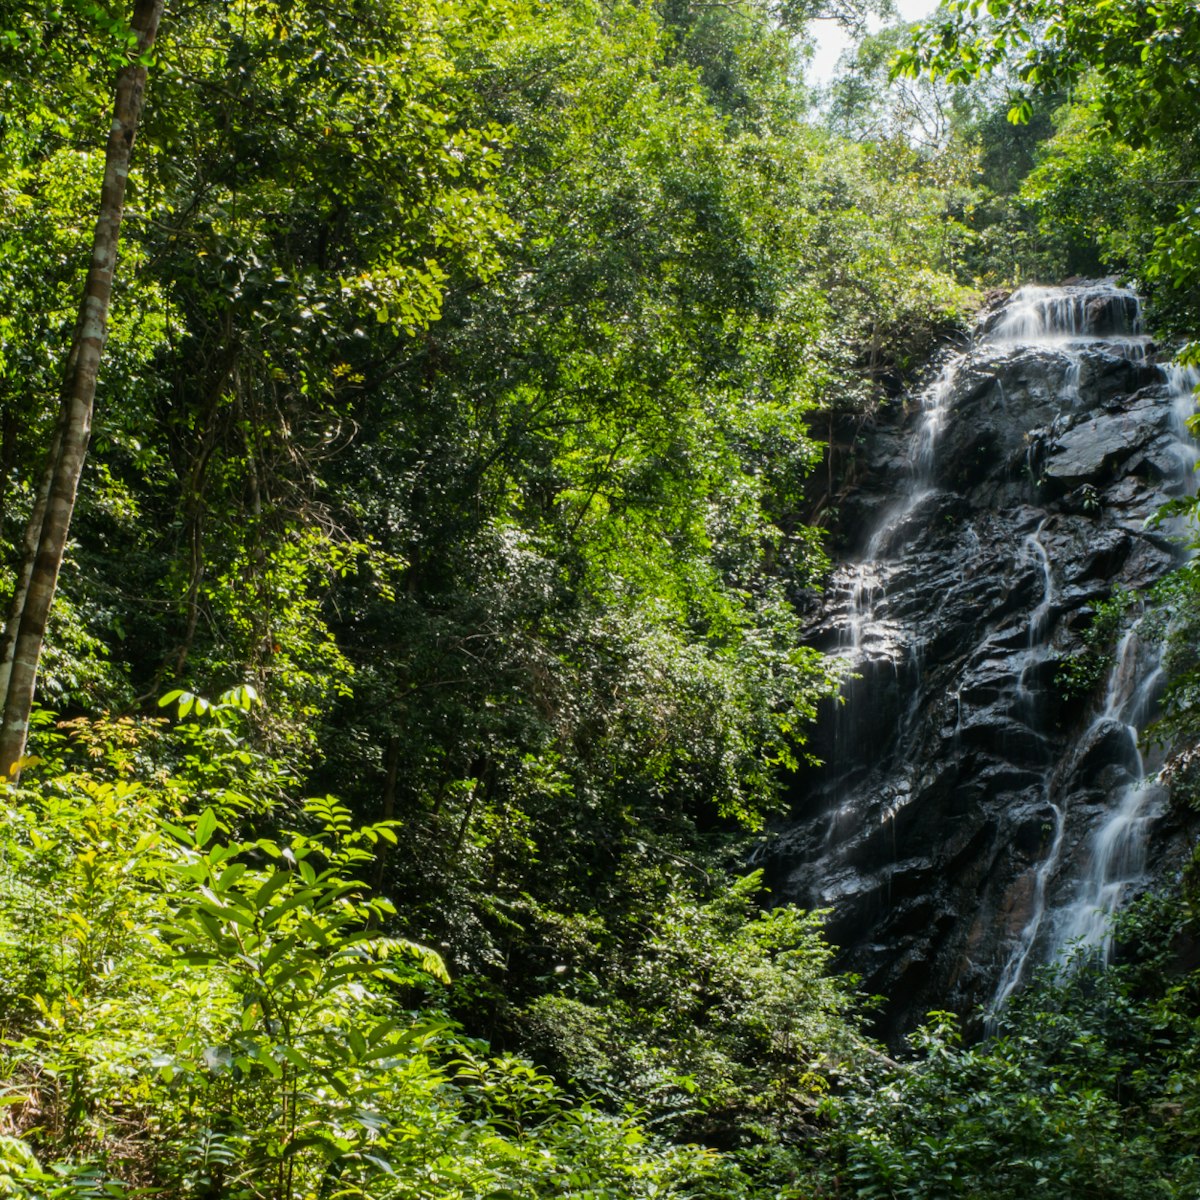 Phaeng Noi waterfall